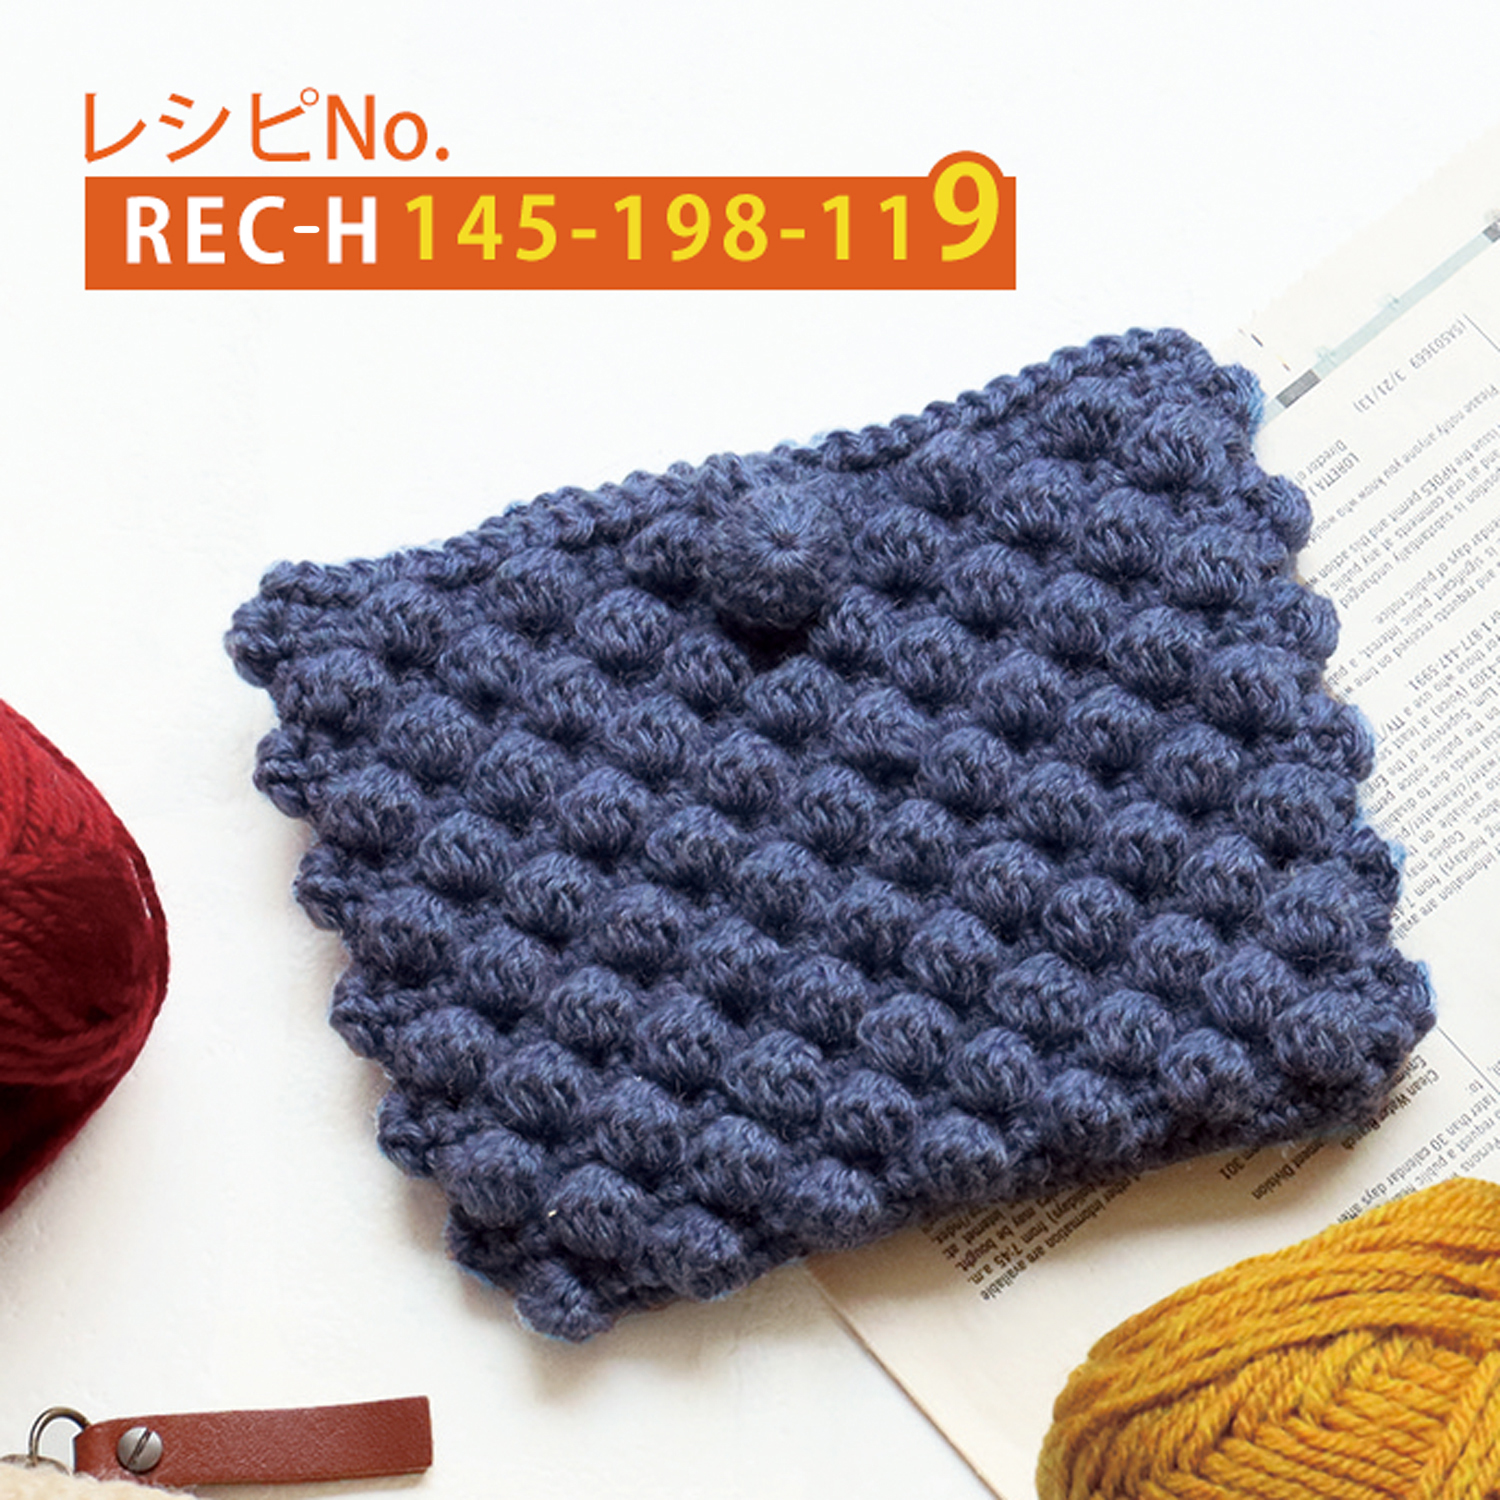 REC-H145-198-119 Textured Purse Knitting Instructions (using Dennis the Menace yarn) (pcs)